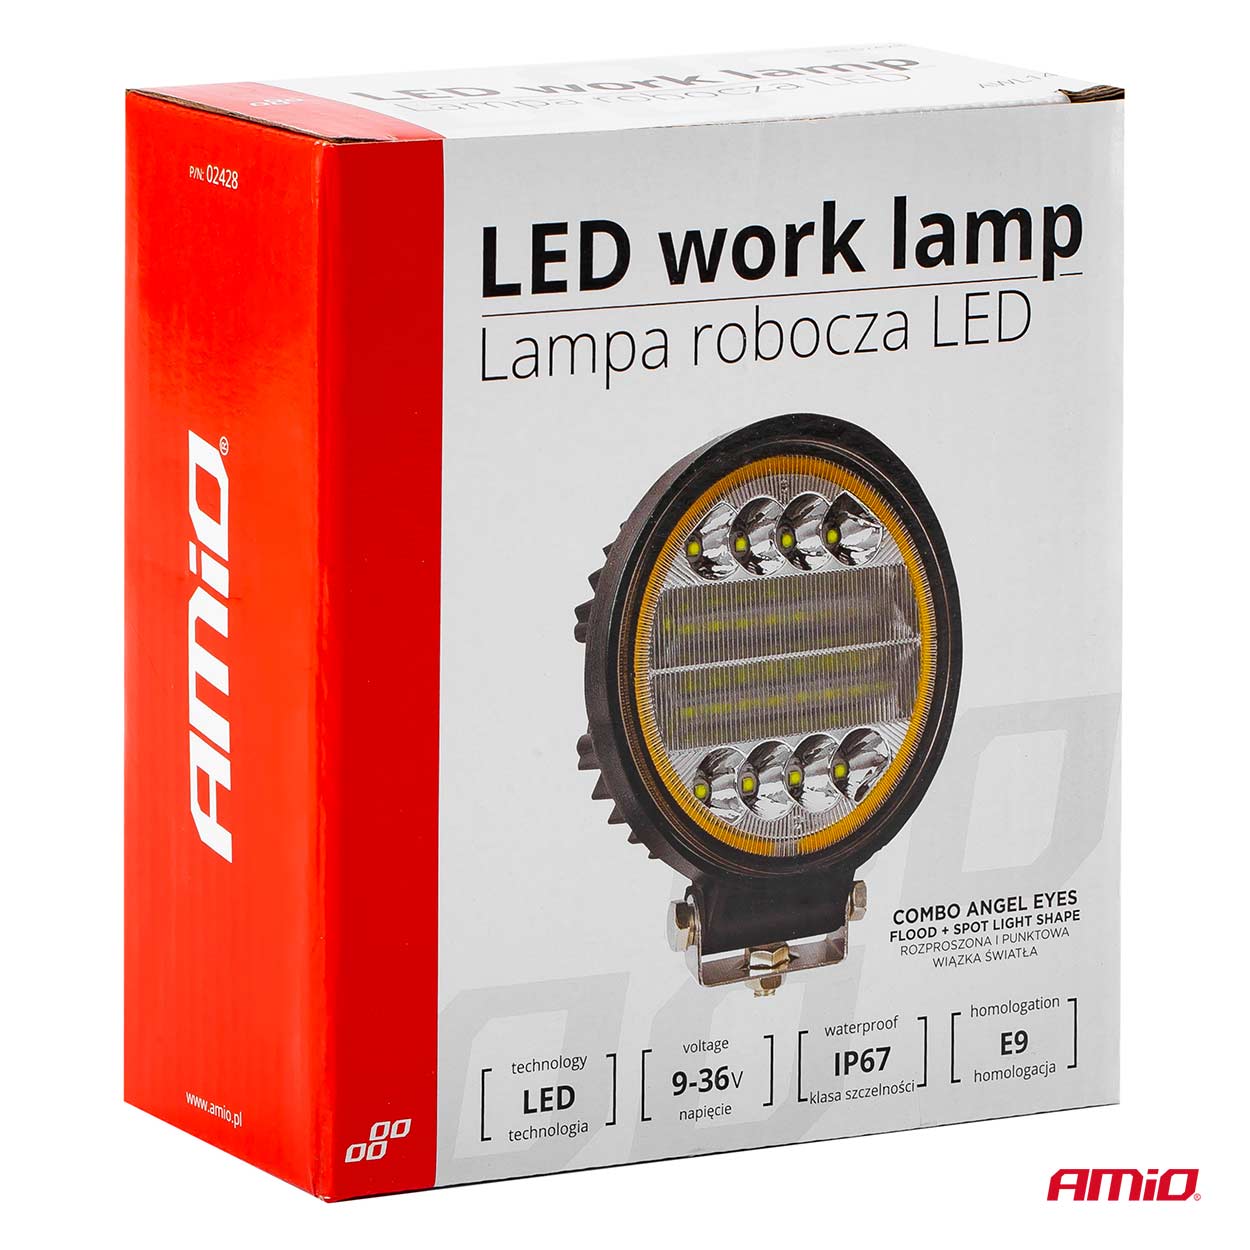 Working lamp AWL14 42 LED COMBO (2 Functions) 9-36V thumb